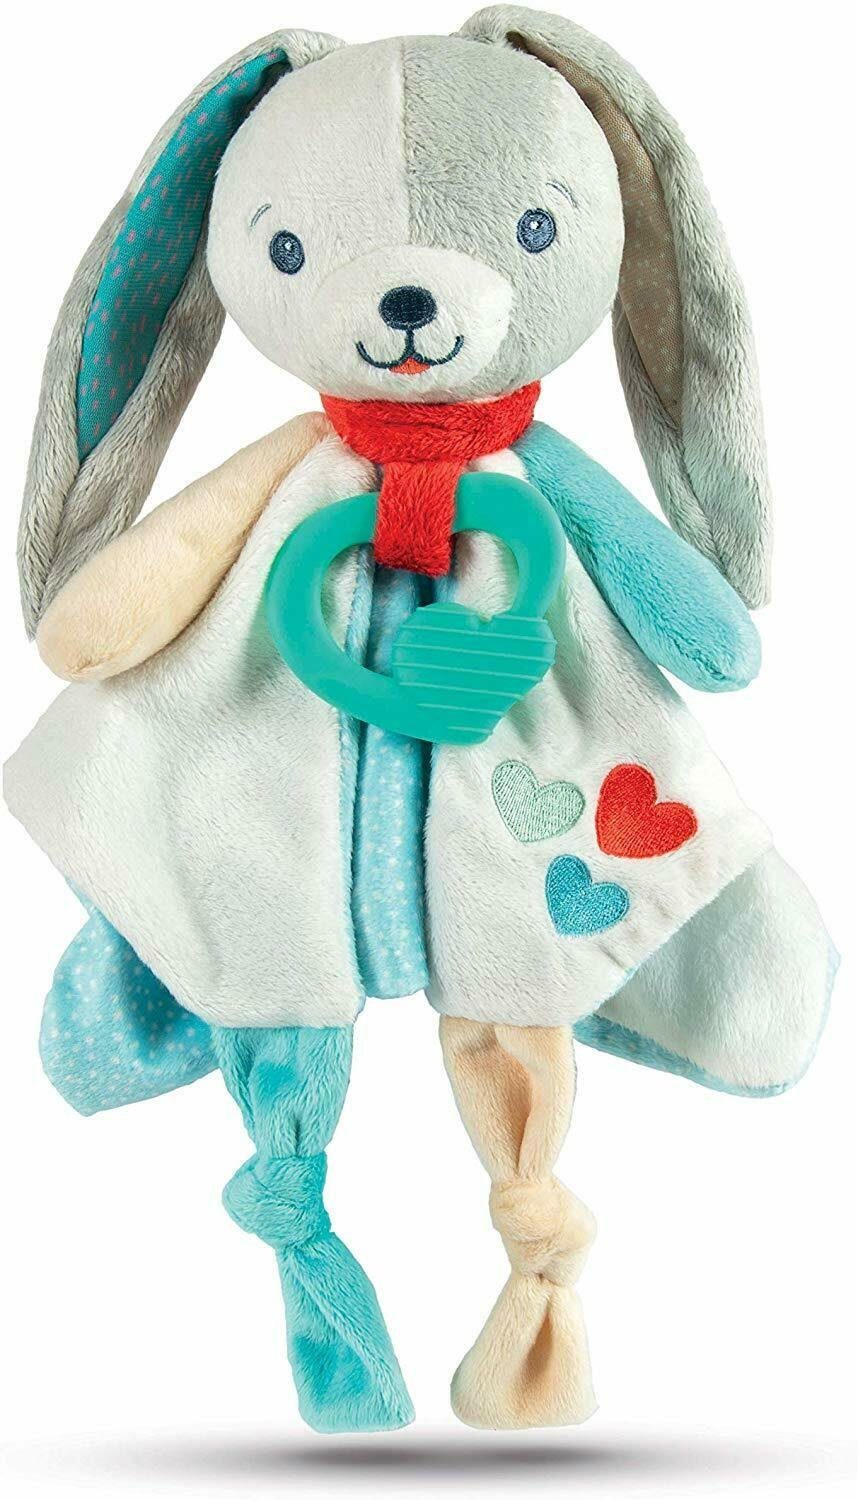 Babydecke Kaninchen Kuscheltier Play With Me 29 cm grau Babyspielzeug, Clementoni®